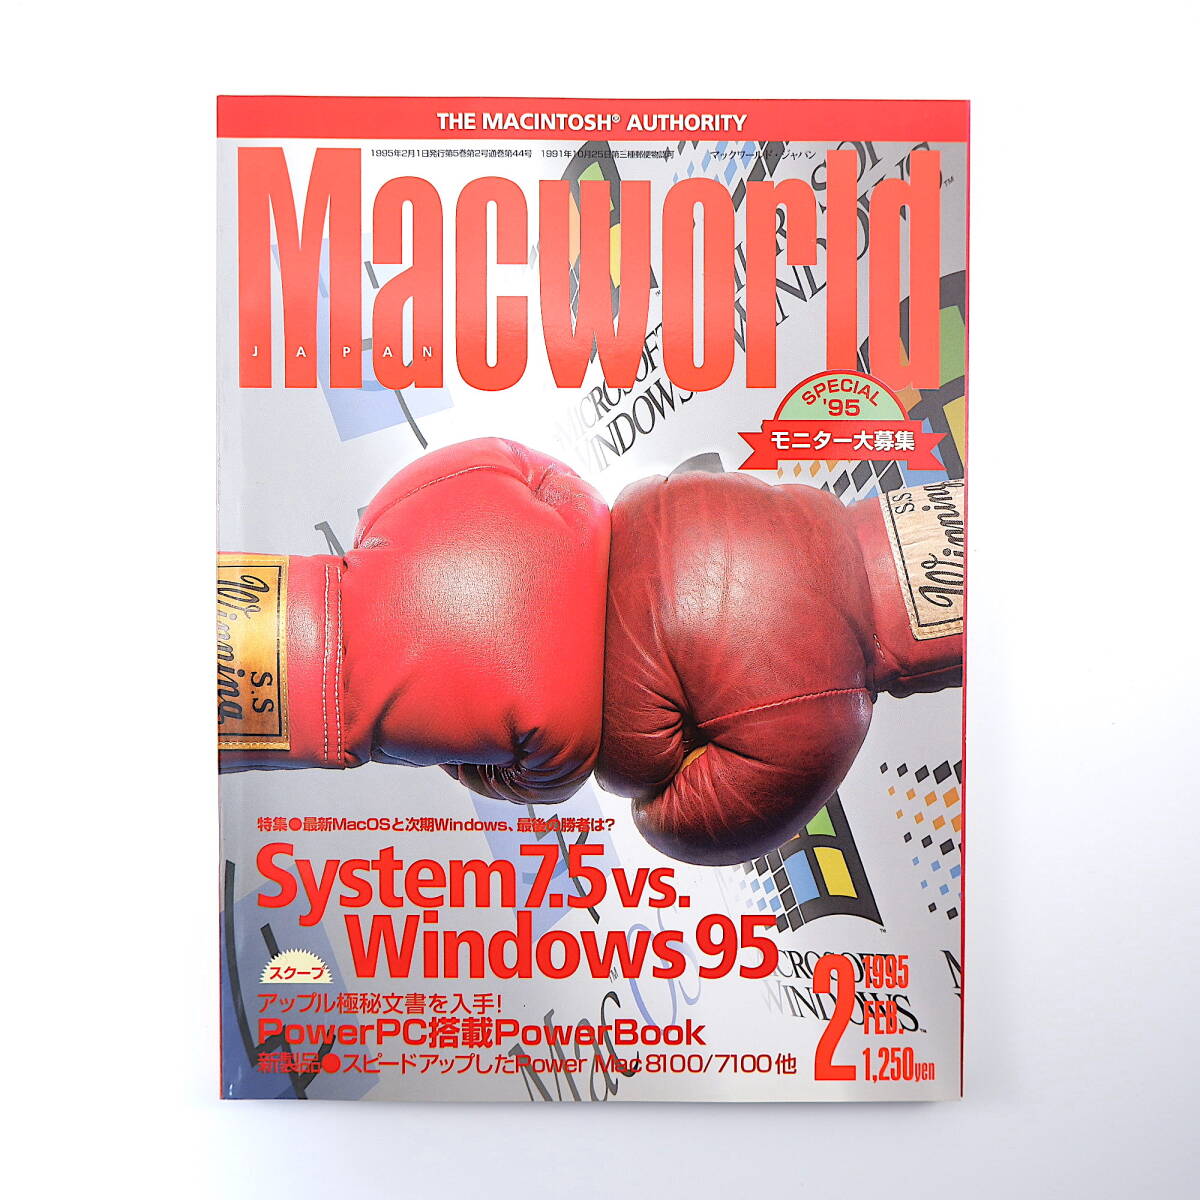 Macworld 1995年2月号◎システム7.5対Windows95/最後の勝者は？ PowerPC搭載PowerBook MACWORLD EXPO東京プレビュー マックワールド_画像1